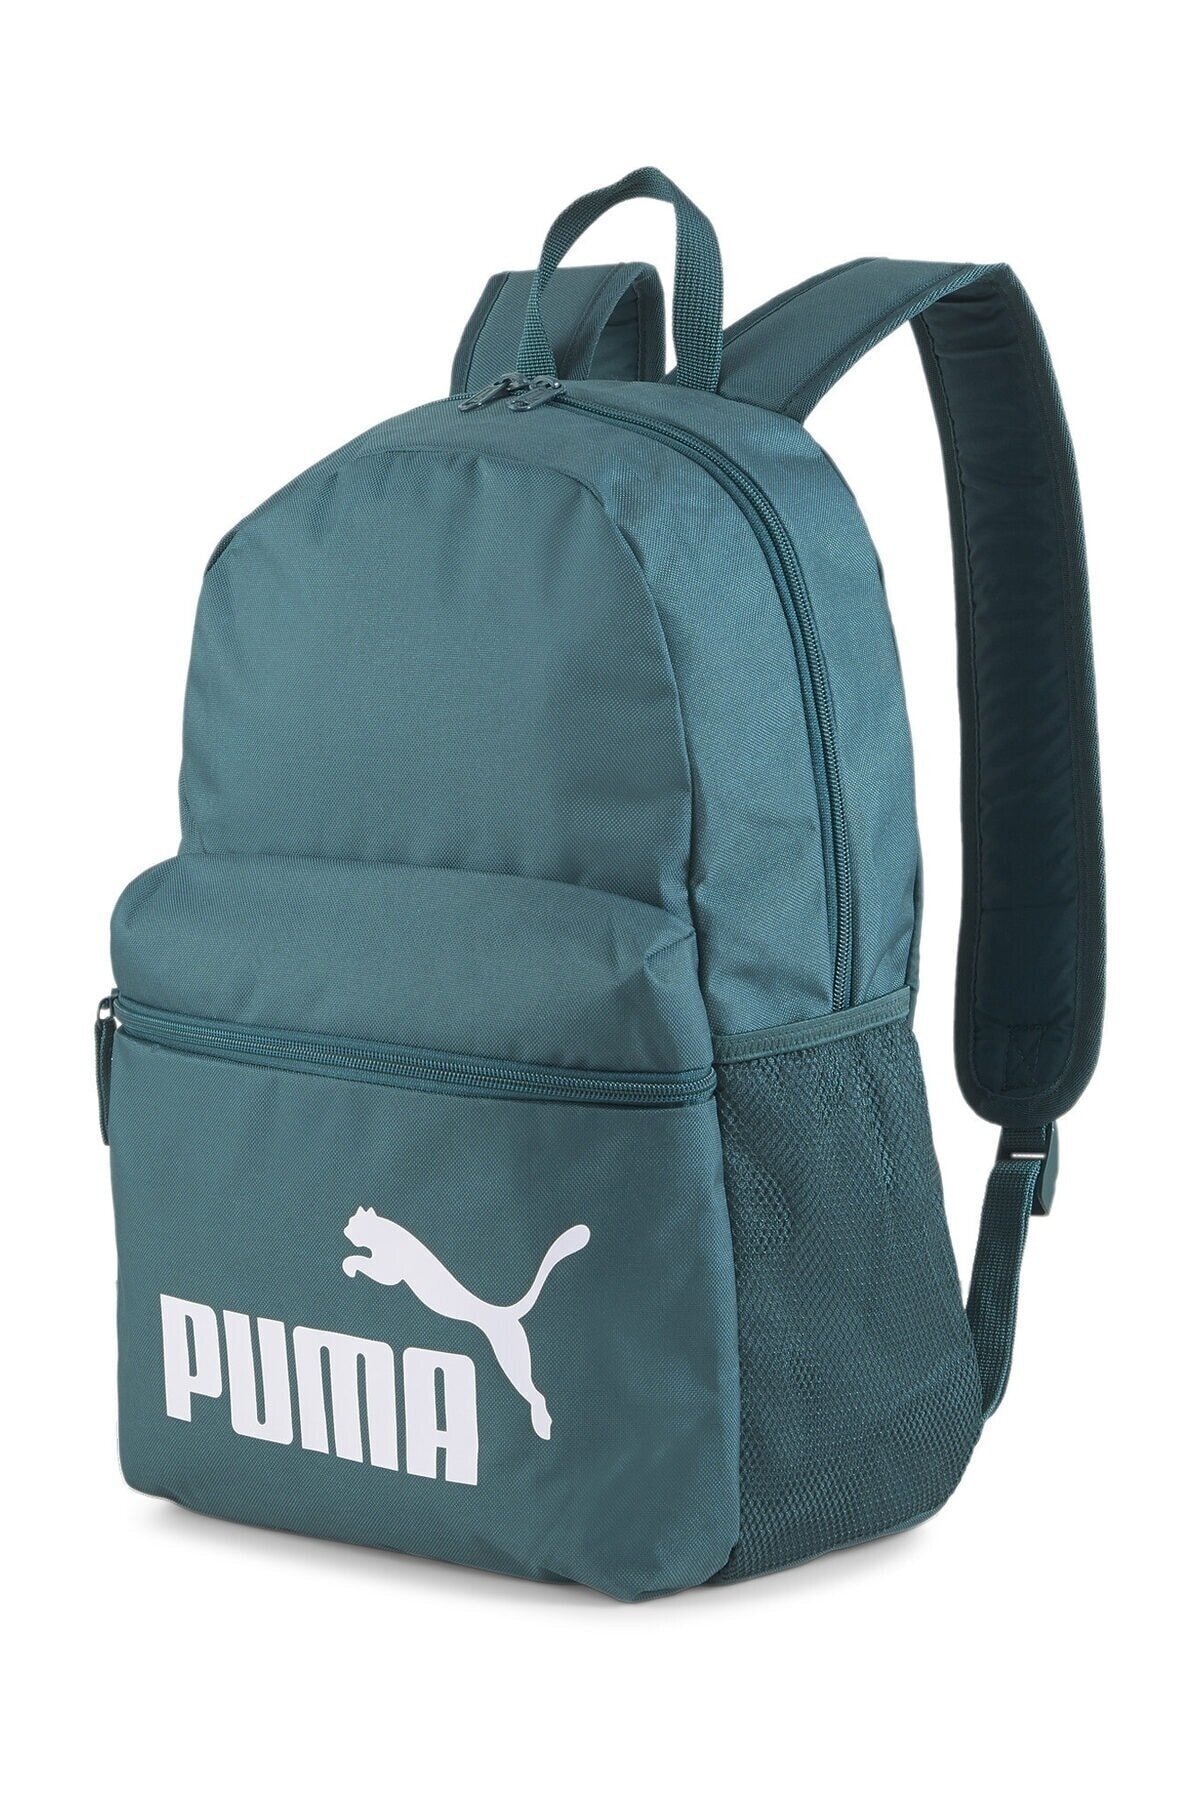 Puma Phase Backpack Varsity Green